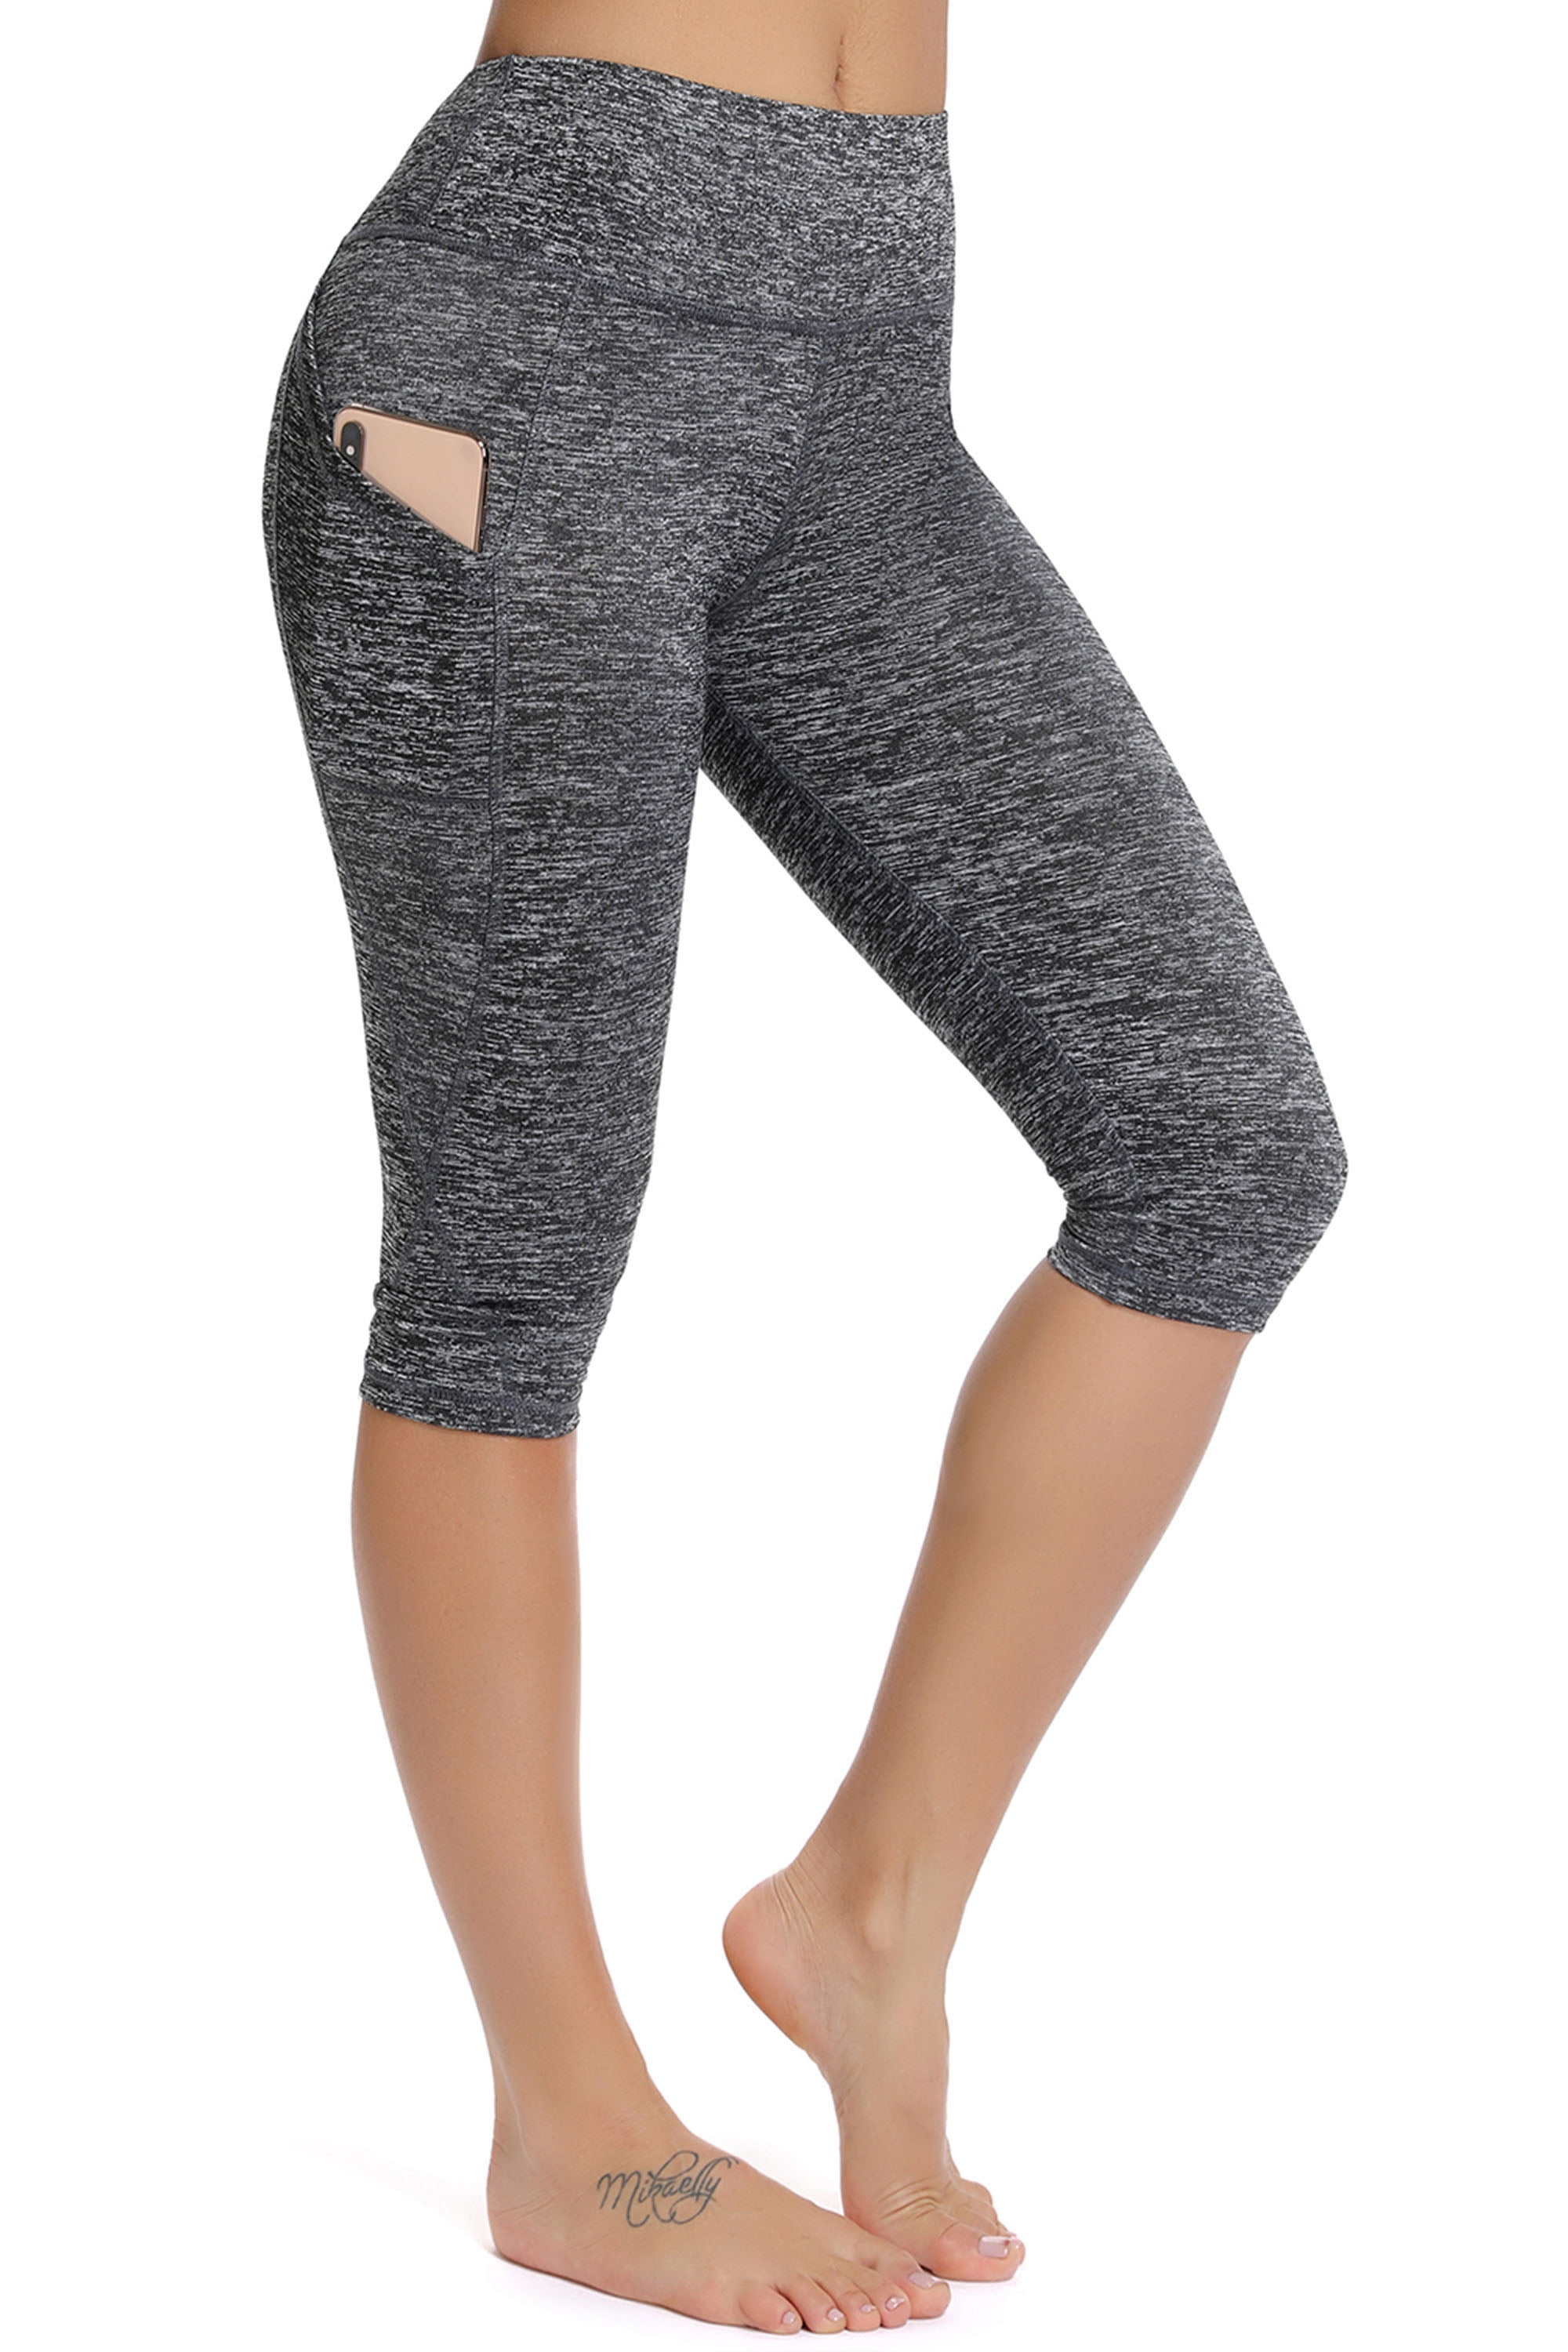 RAYPOSE Women’s Workout Running Capris Leggings Pocket Tummy Control High Waist Yoga Pants